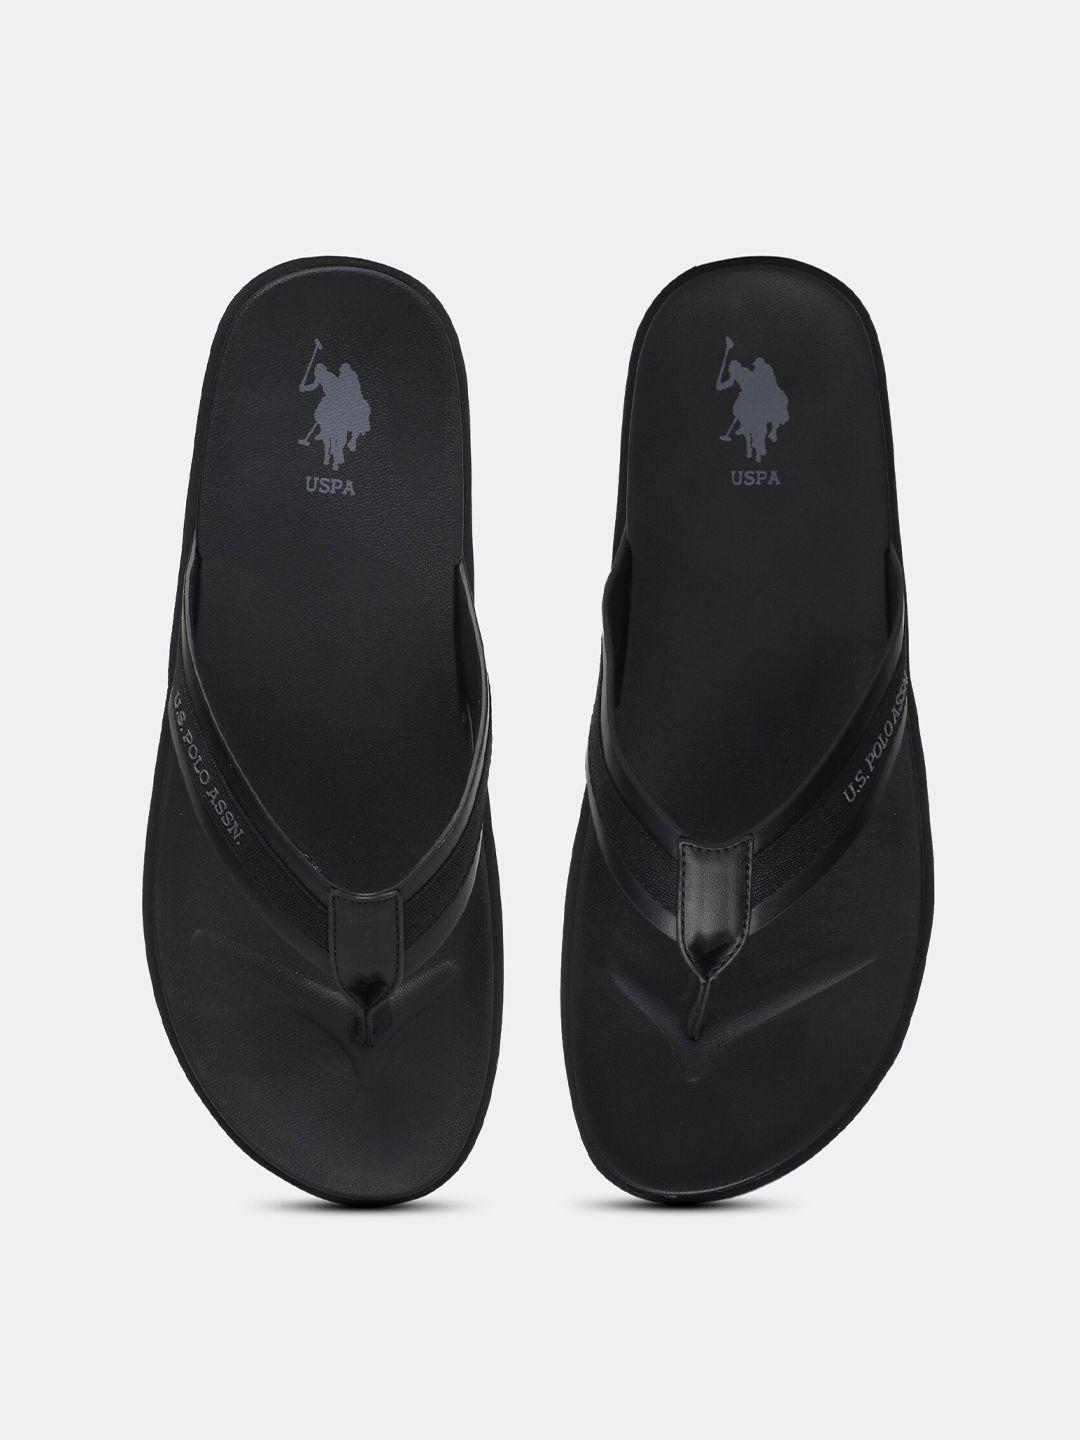 u-s-polo-assn-men-black-&-grey-pu-comfort-sandals